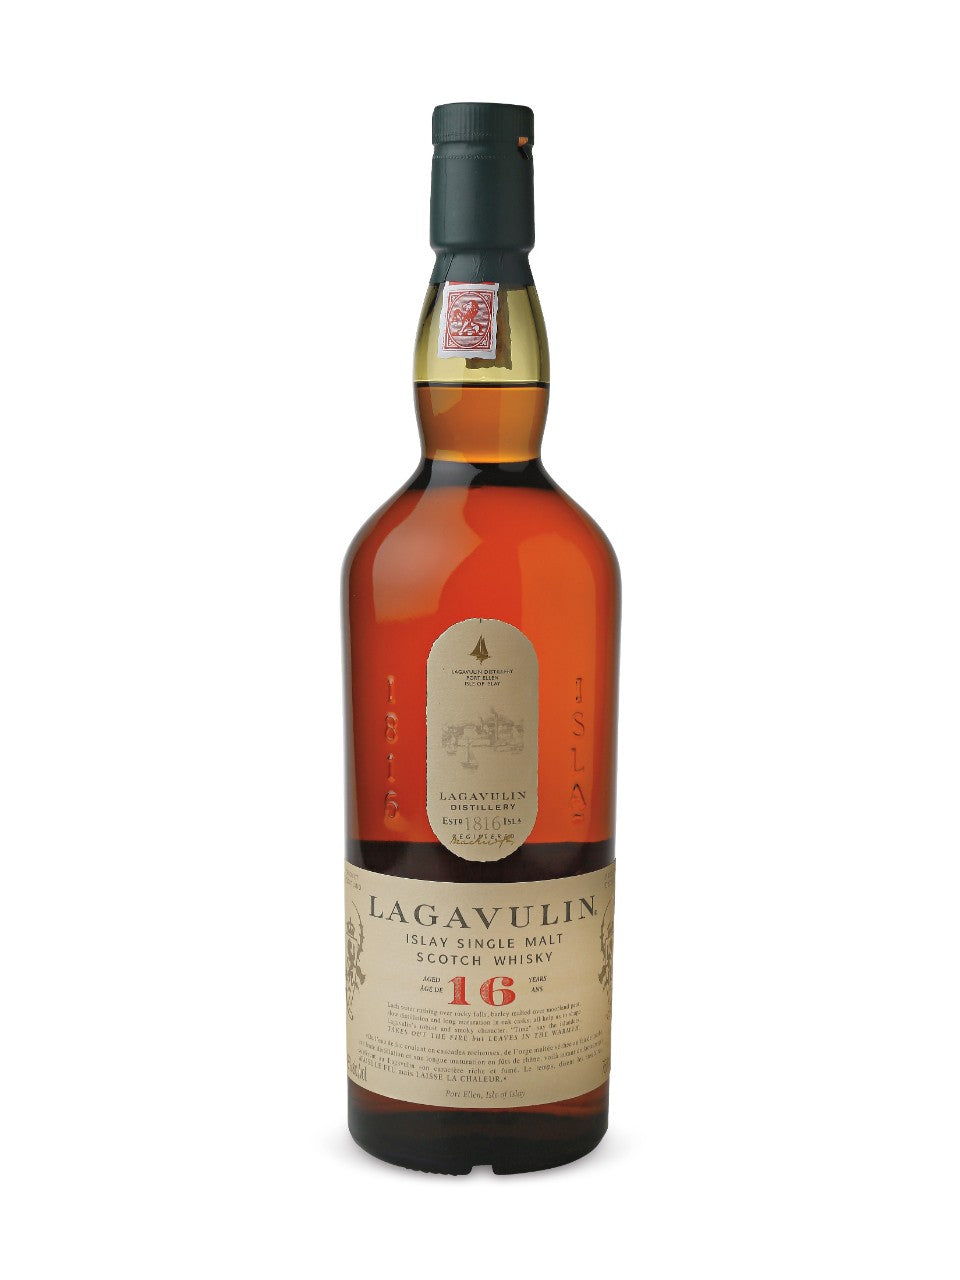 Lagavulin 16 Year Old Islay Single Malt Scotch Whisky 750 ml bottle